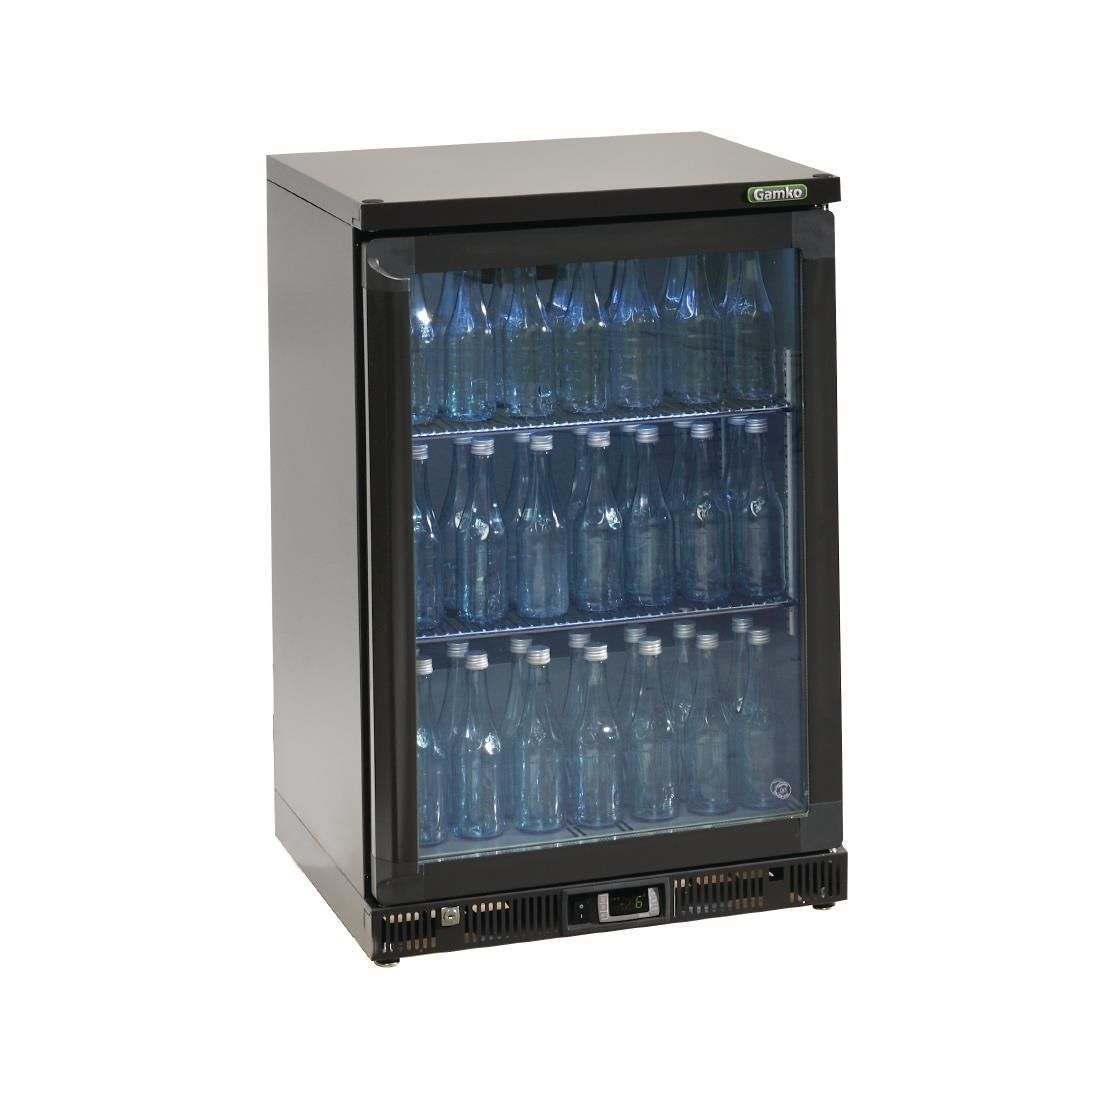 Gamko Bottle Cooler - Single Hinged Door 150 Ltr Black JD Catering Equipment Solutions Ltd